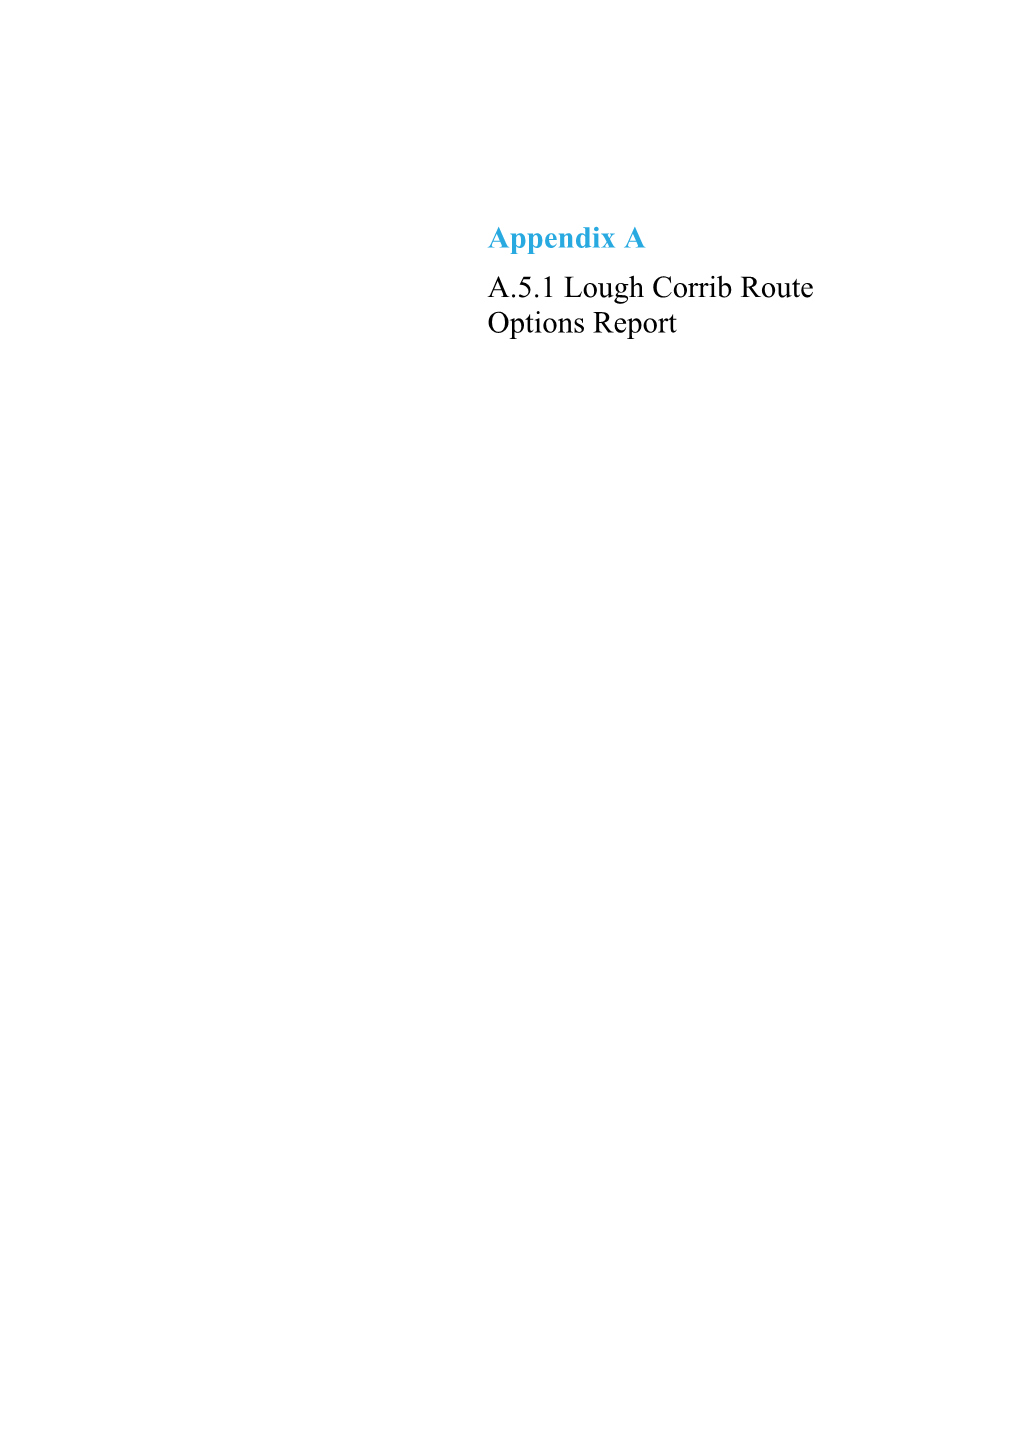 A.5.1 Lough Corrib Route Options Report